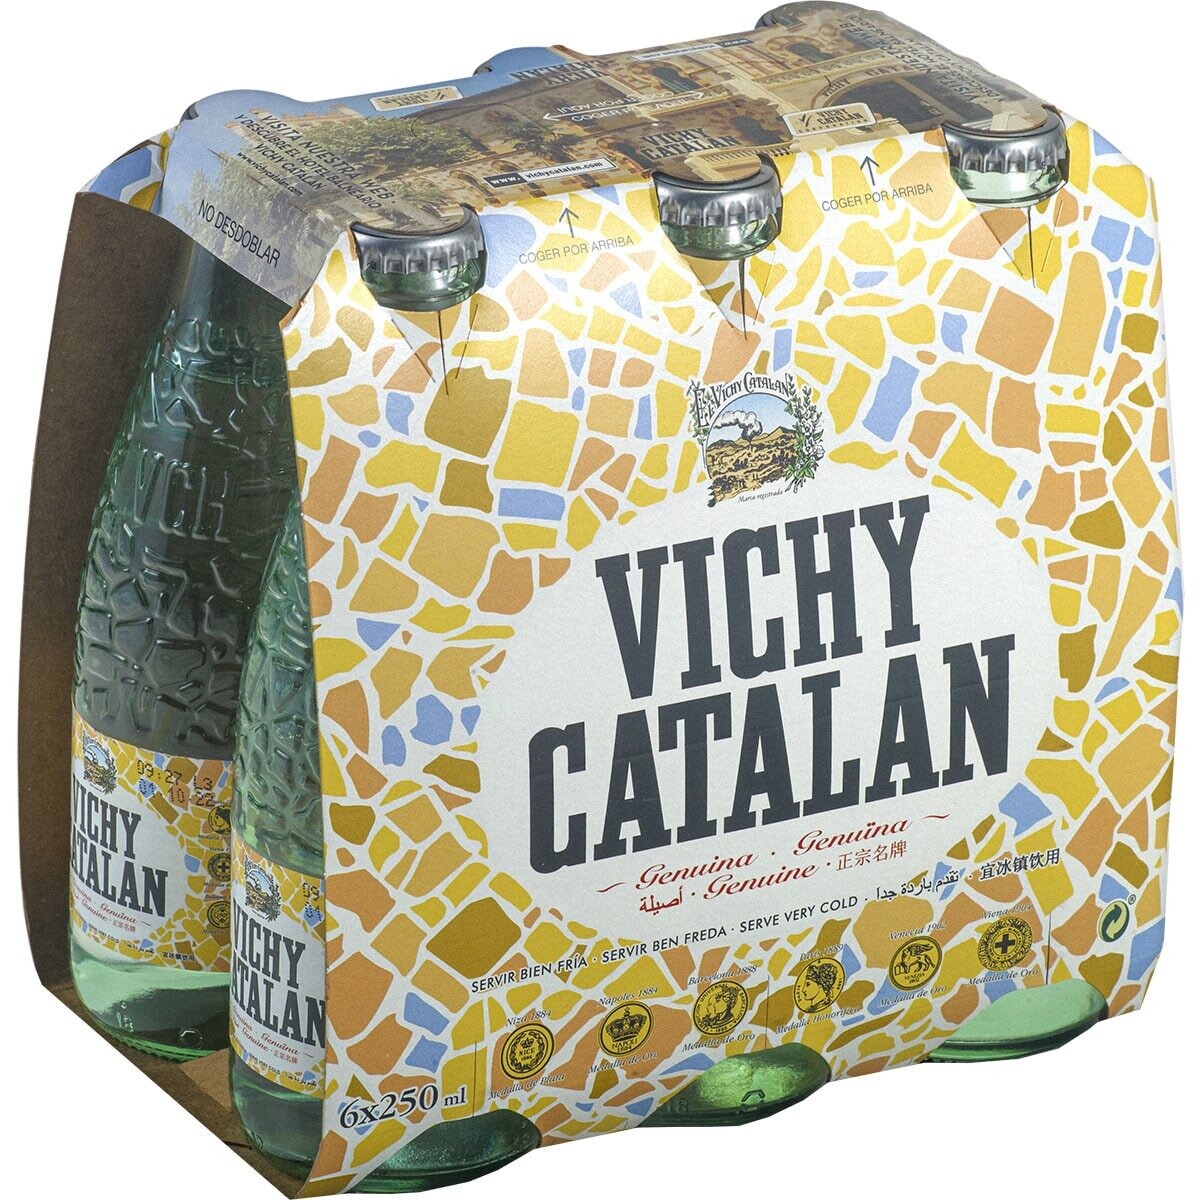 Vichy Catalan Sparkling Water 6 x 8oz